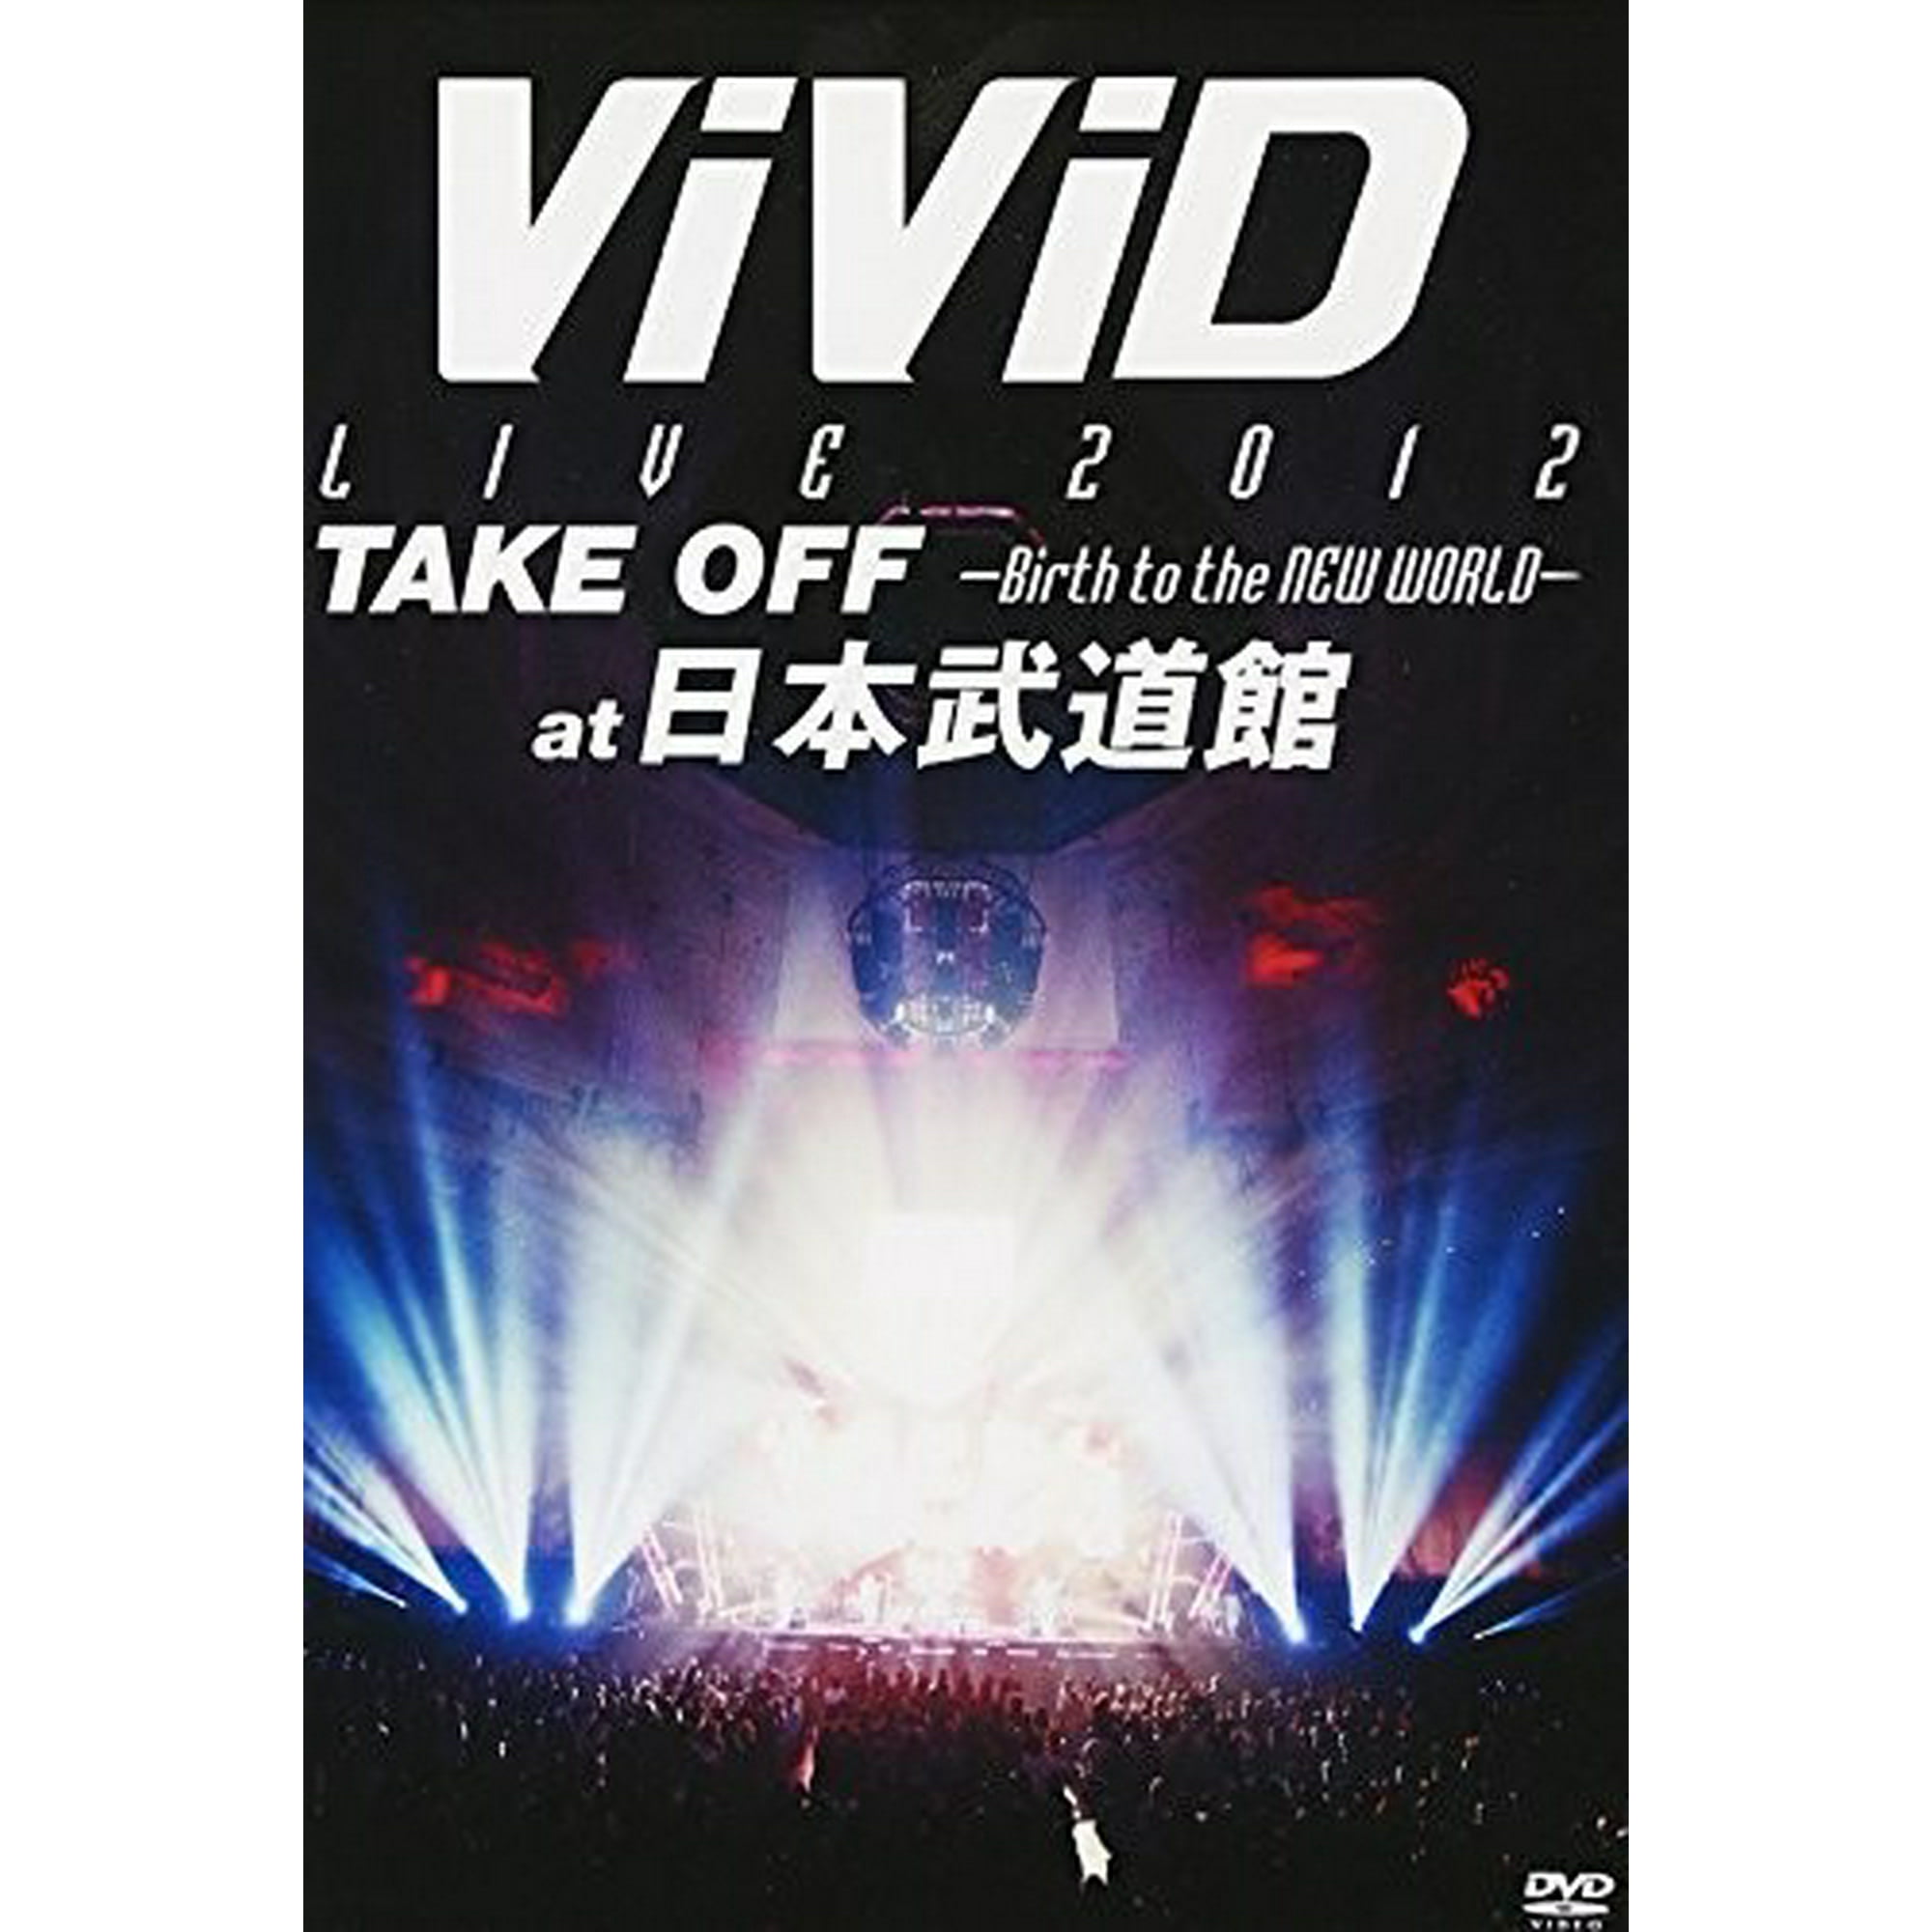 Vivid - Live 2012 Take Off: Birth to the New World [DVD] Hong Kong